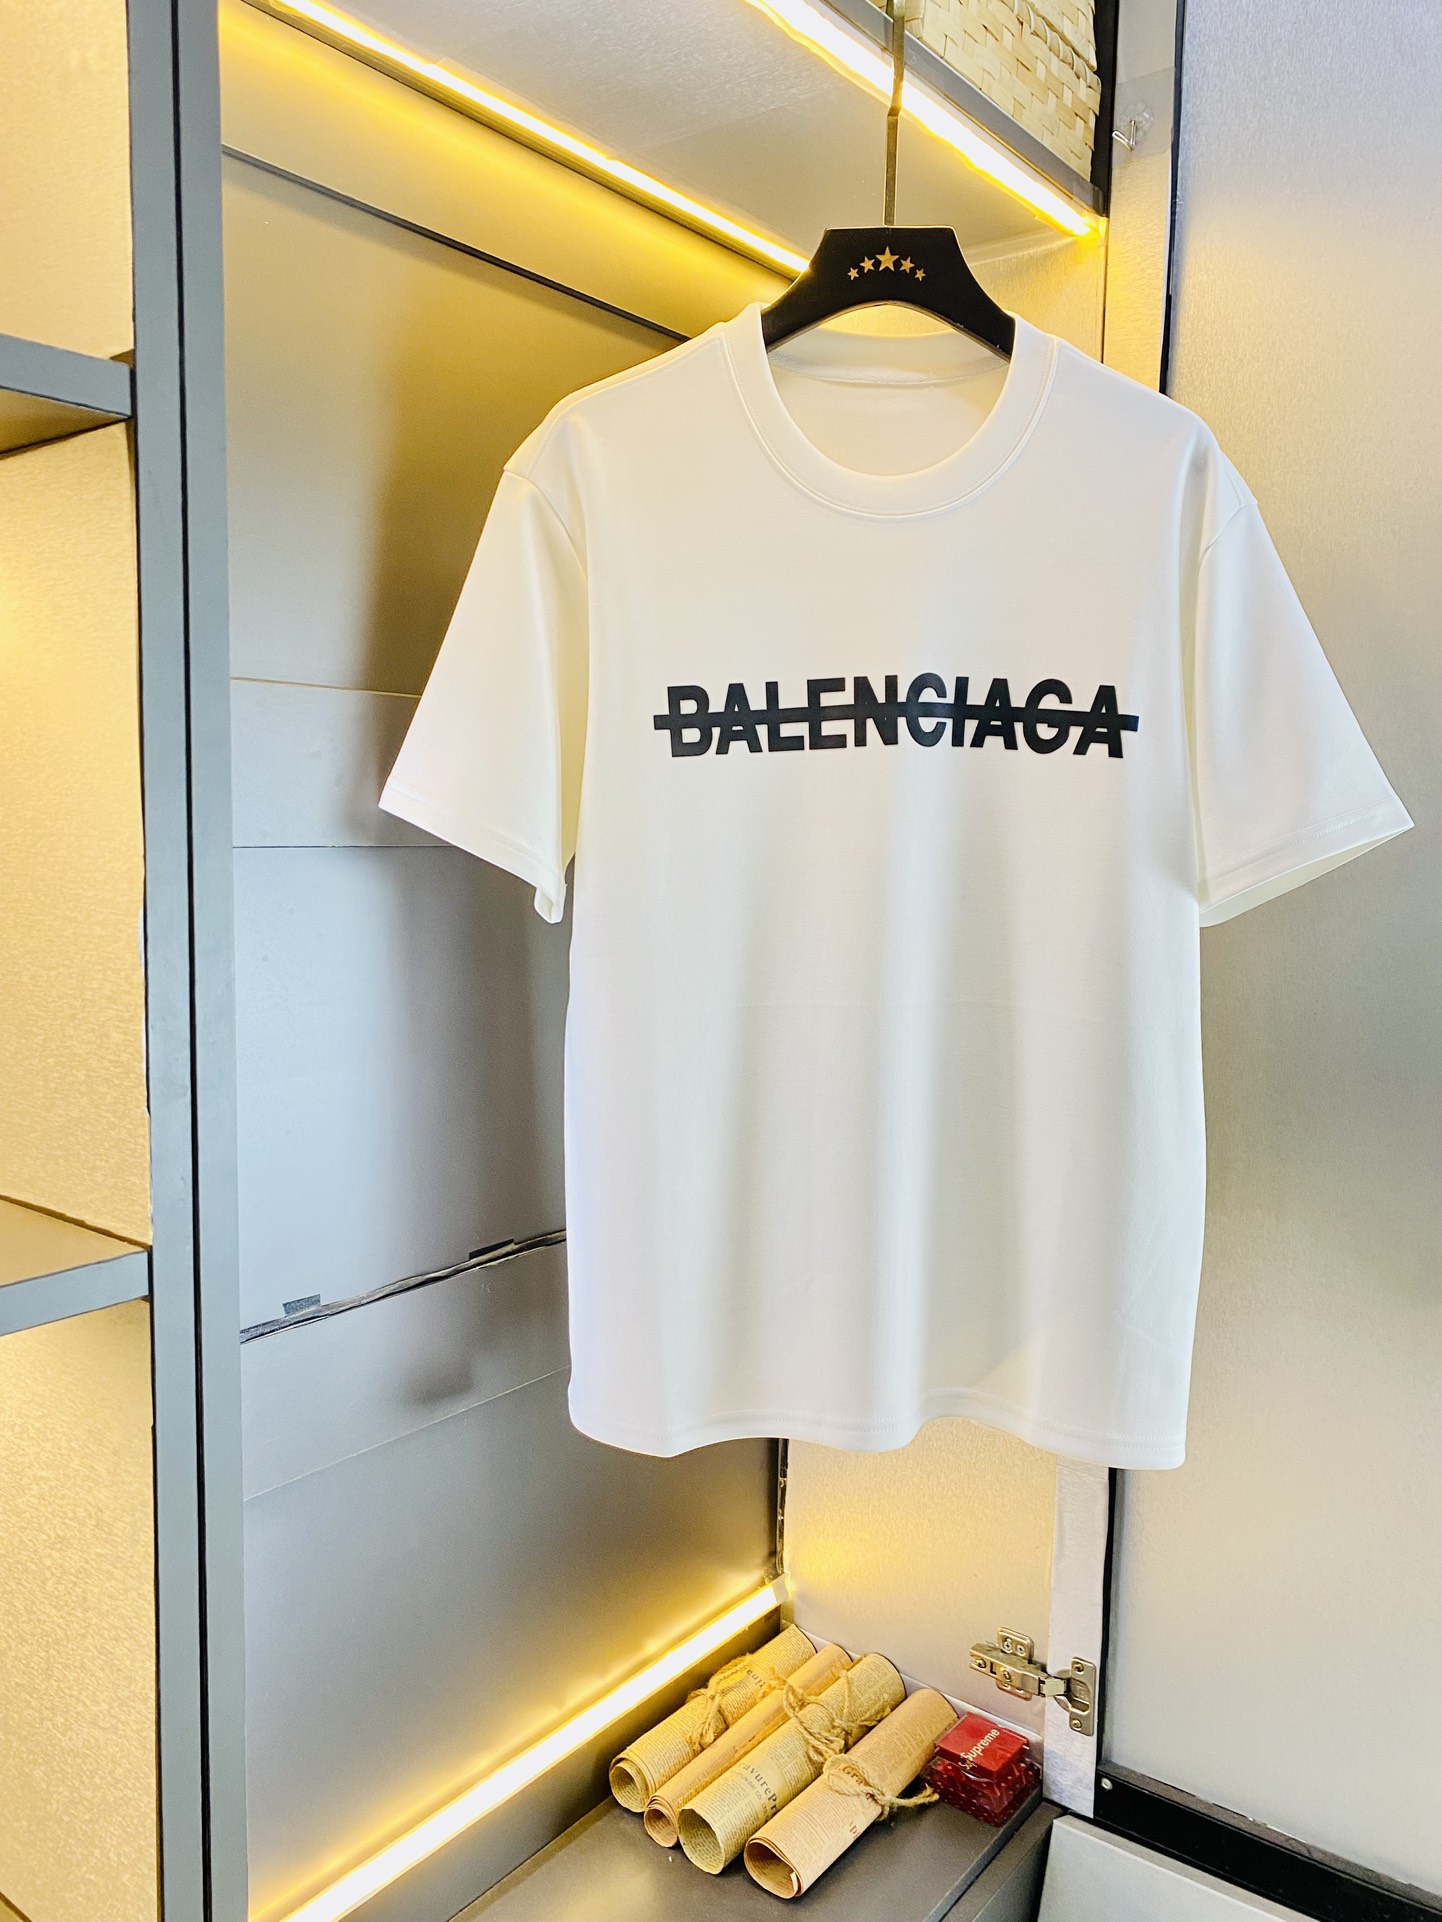 Balenciaga Kleding T-Shirt Unisex Katoen Gemerceriseerd katoen Herfst/winter collectie Korte mouw